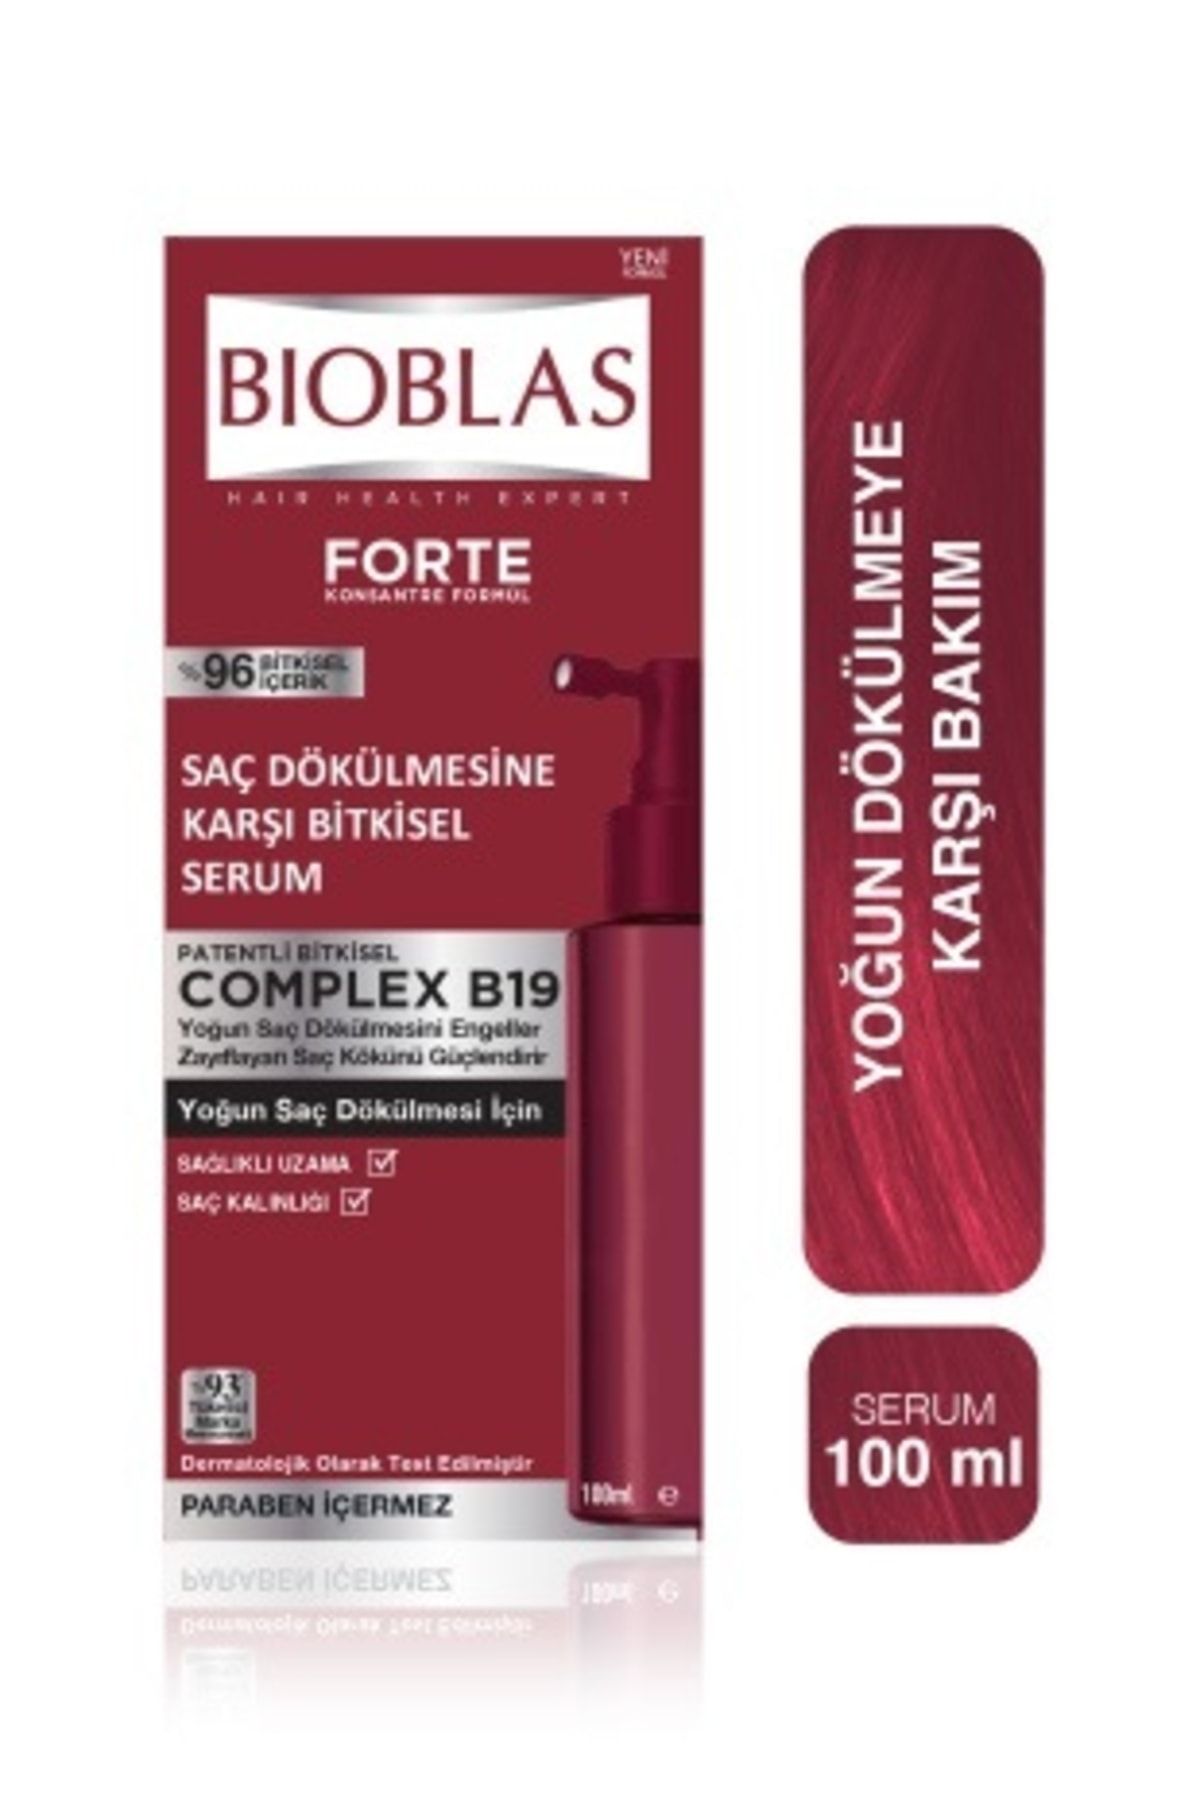 Bioblas Yoğun Saç Dökülme Karşıtı Bitkisel Saç Serumu Forte